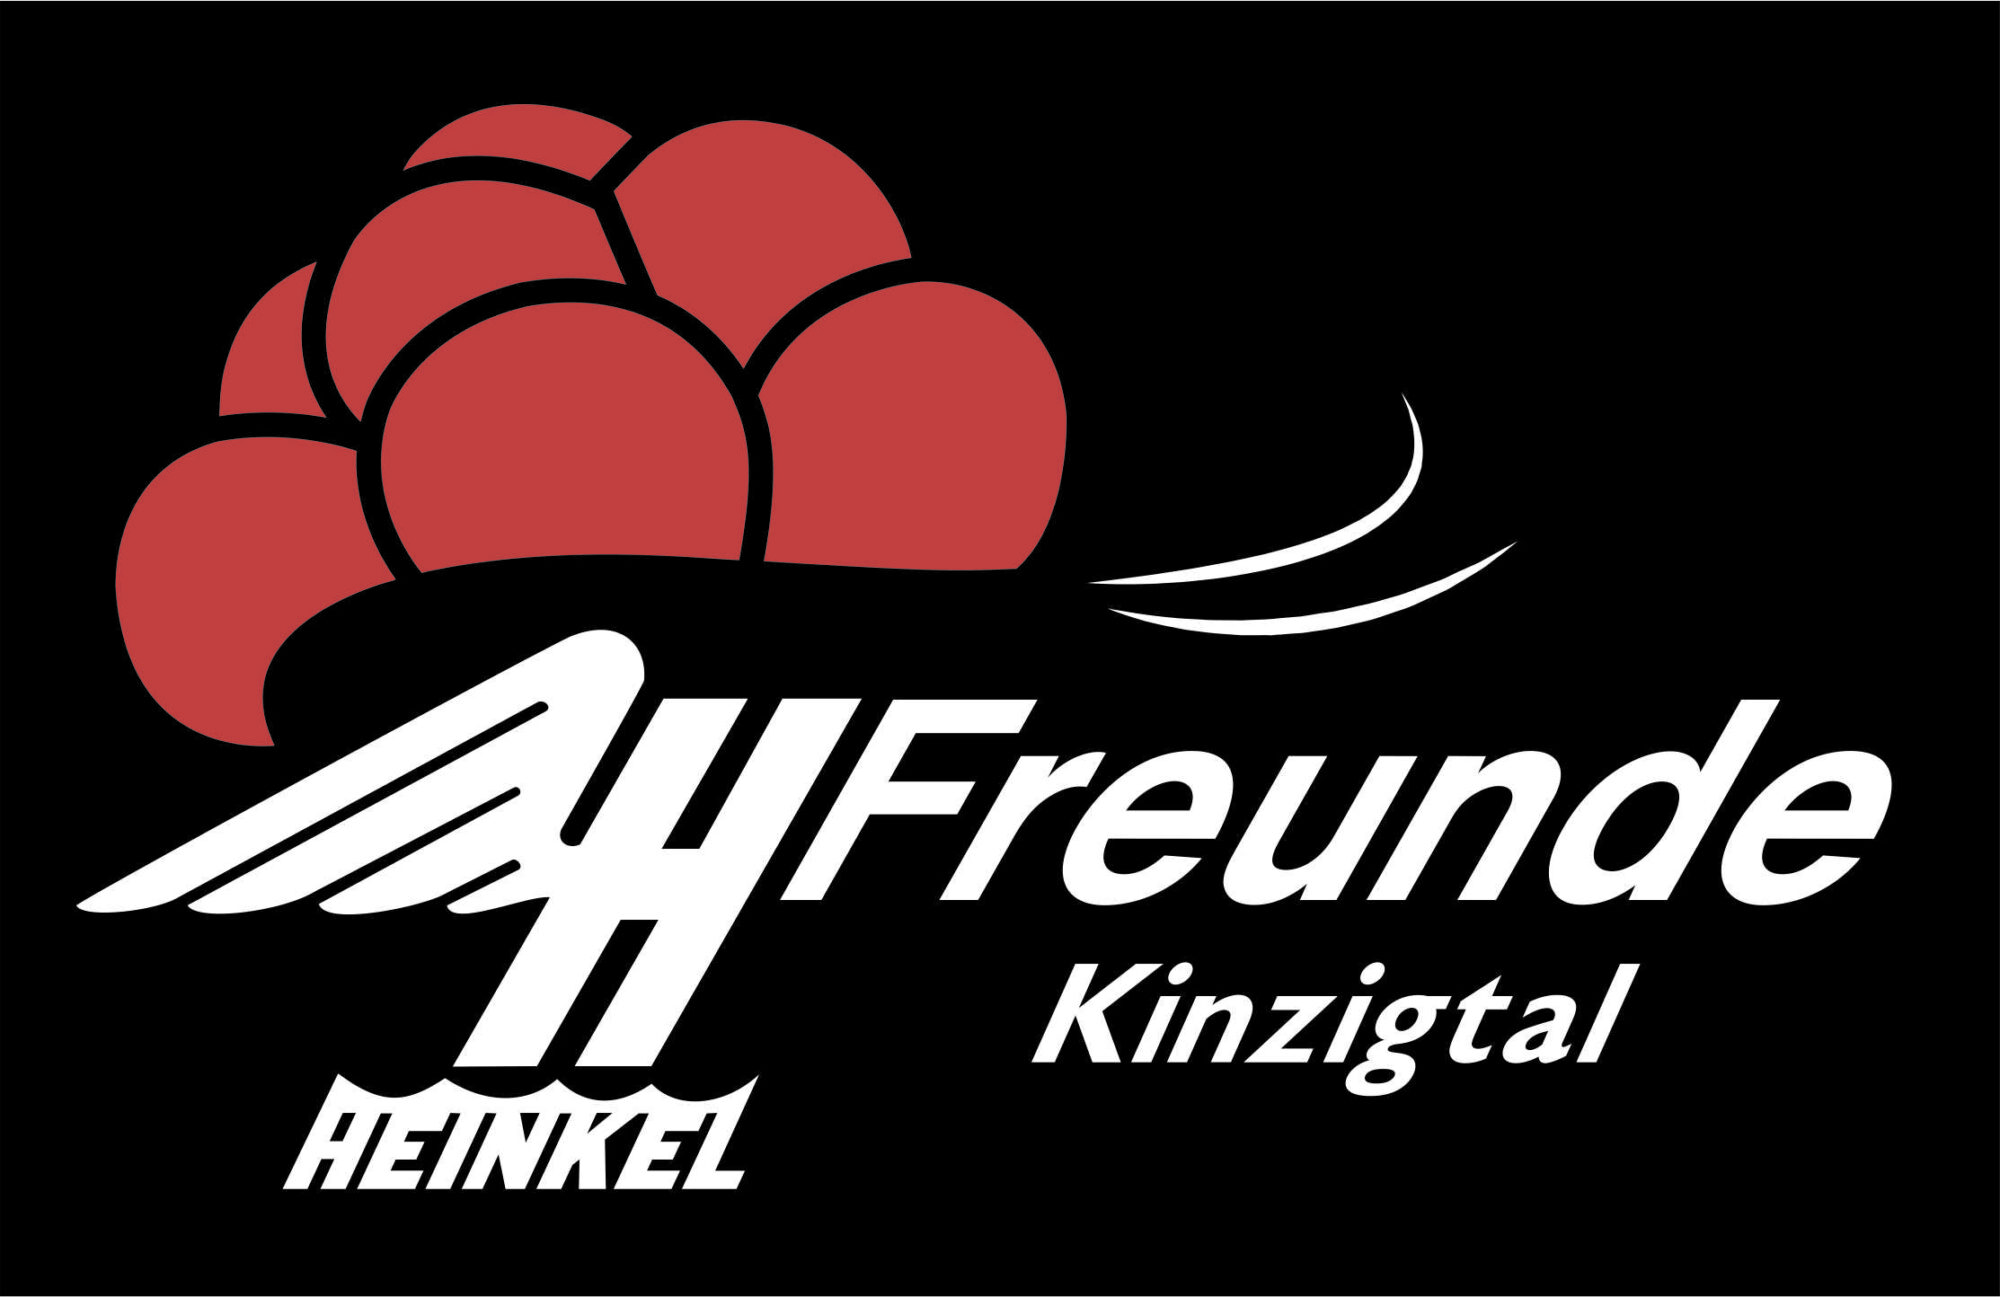 Heinkel Freunde Kinzigtal